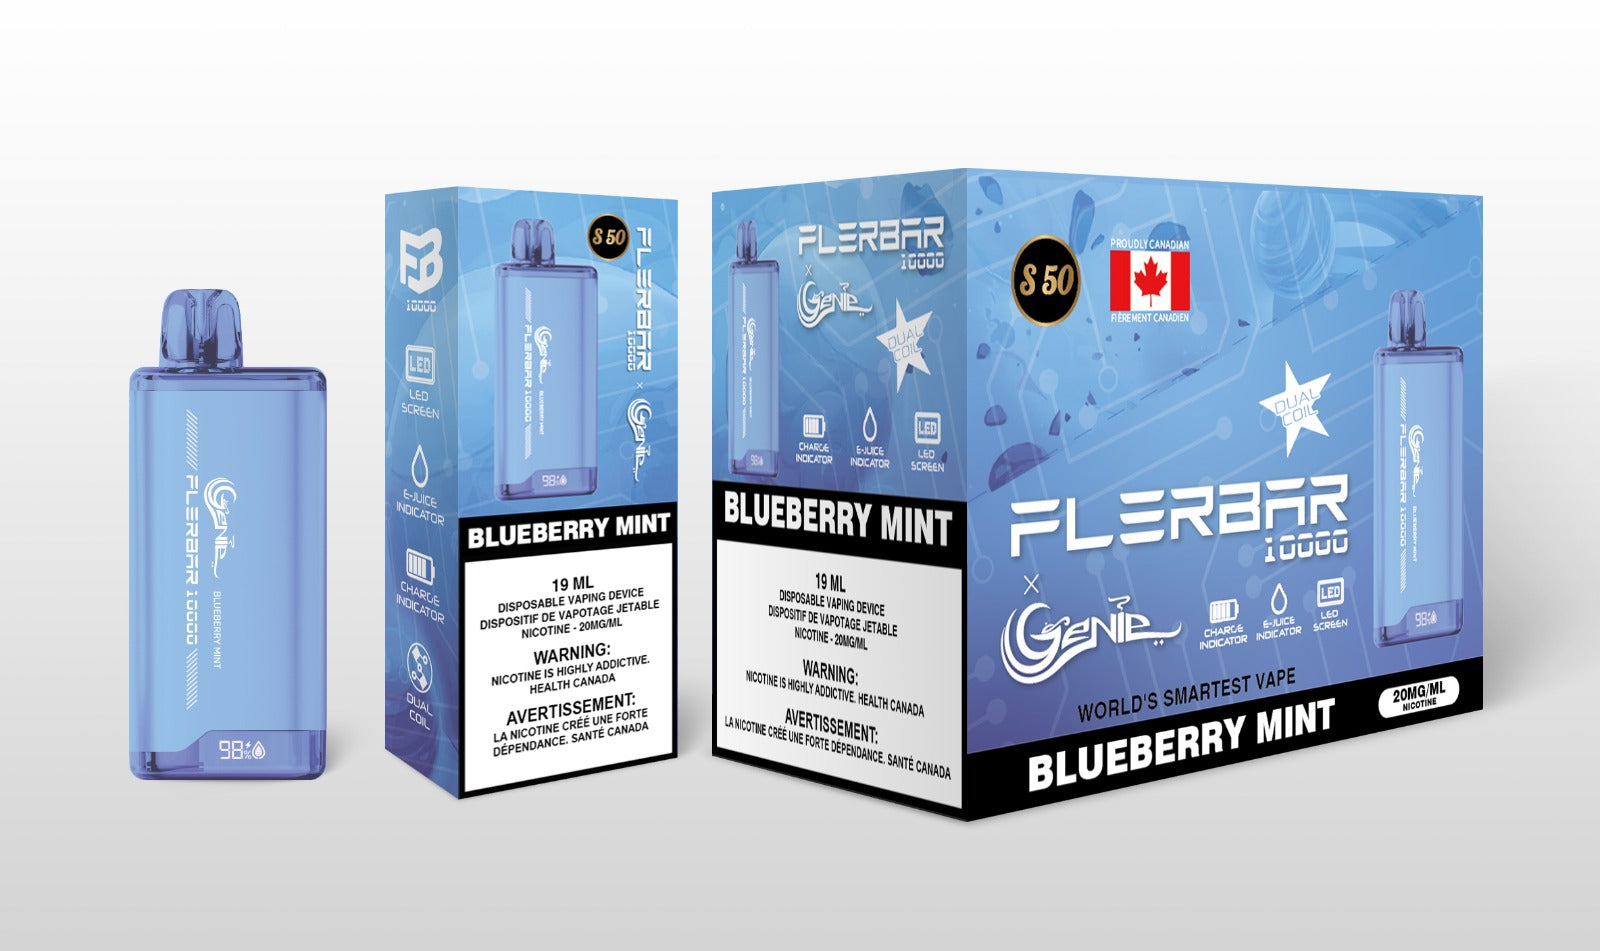 Genie 10000 flerbar - 10000 PUFFS  20 mg / mL Salt Nicotine  Juice Capacity: 19 mL  Dual Coil  Charge Indicator  E- Juice Indicator  LED Screen  Blueberry mint s50